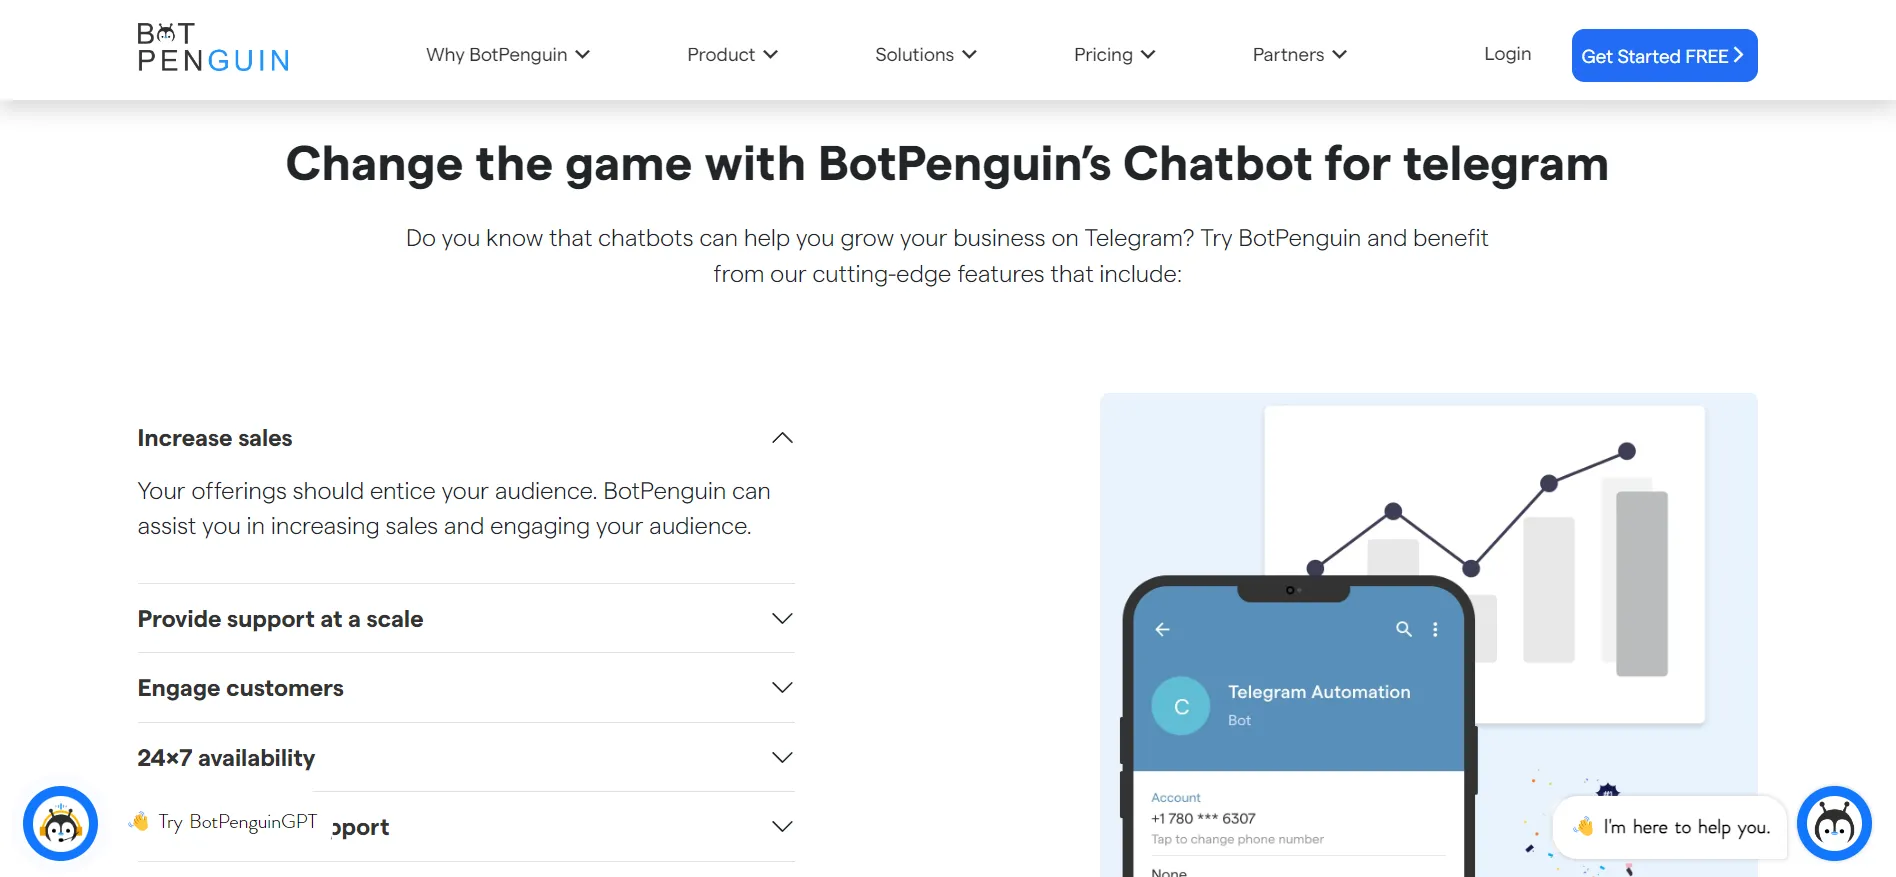 Why use Telegram Chatbots?